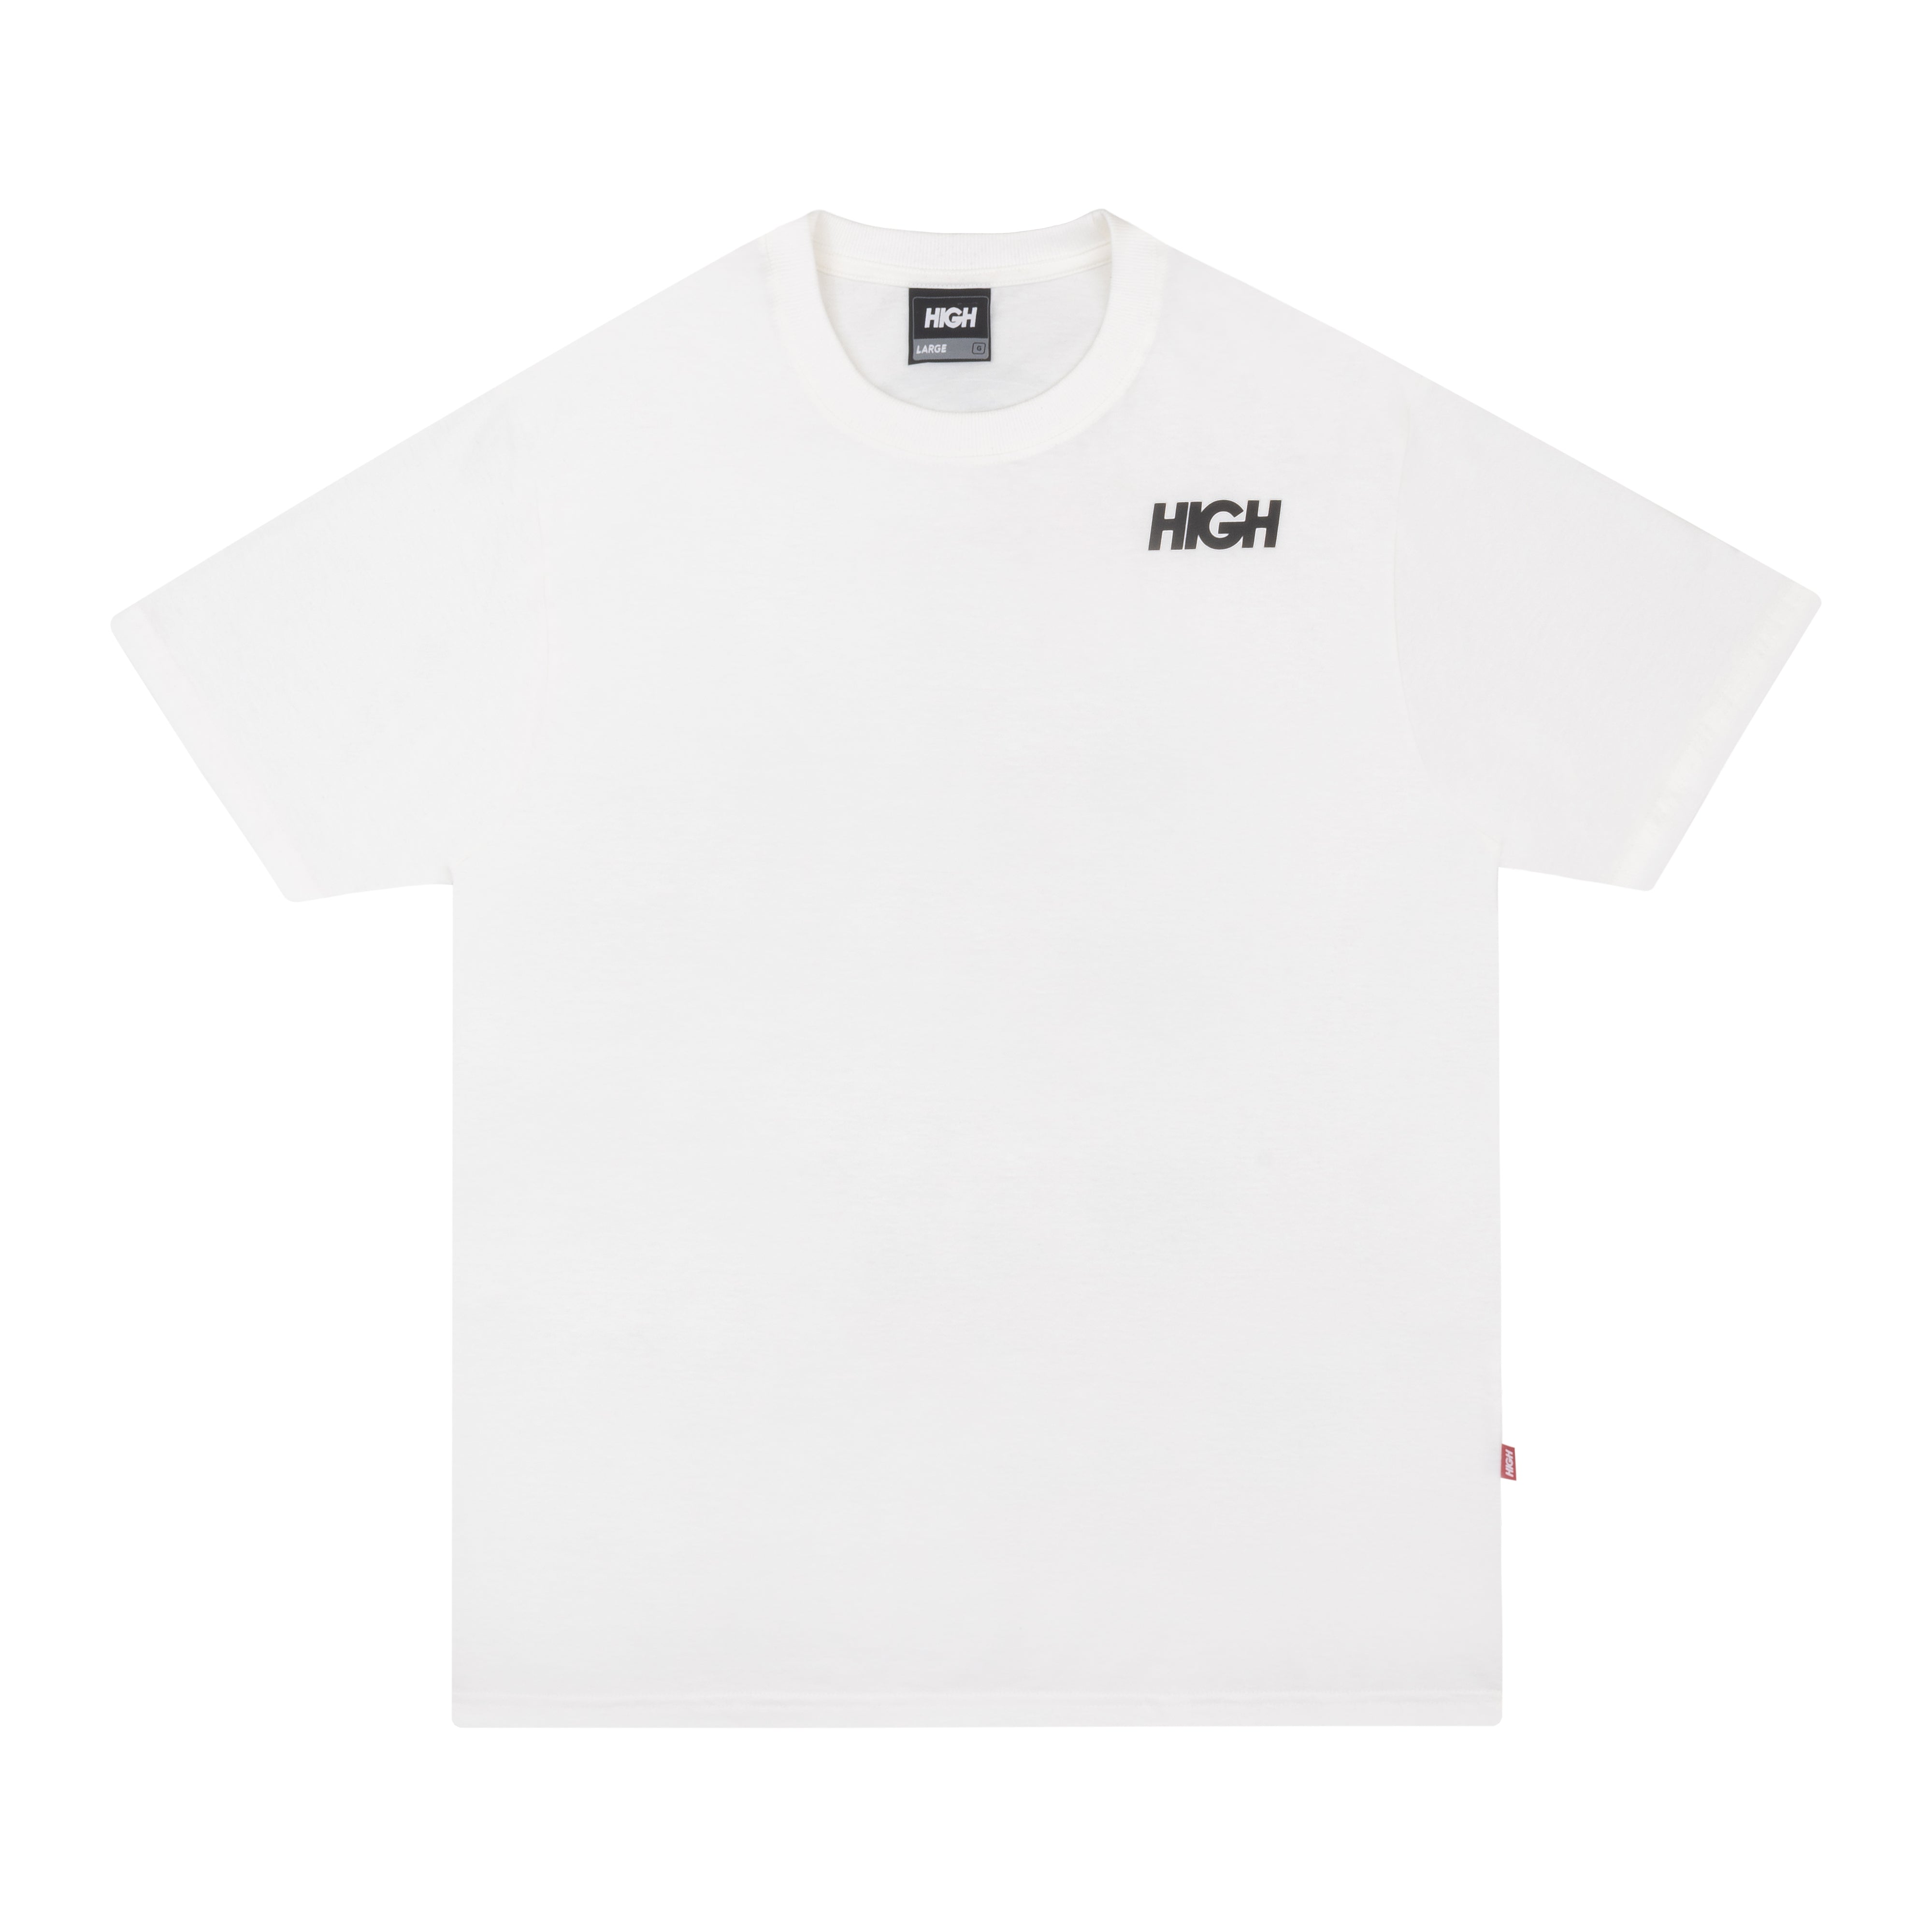 HIGH - Camiseta Bulb White